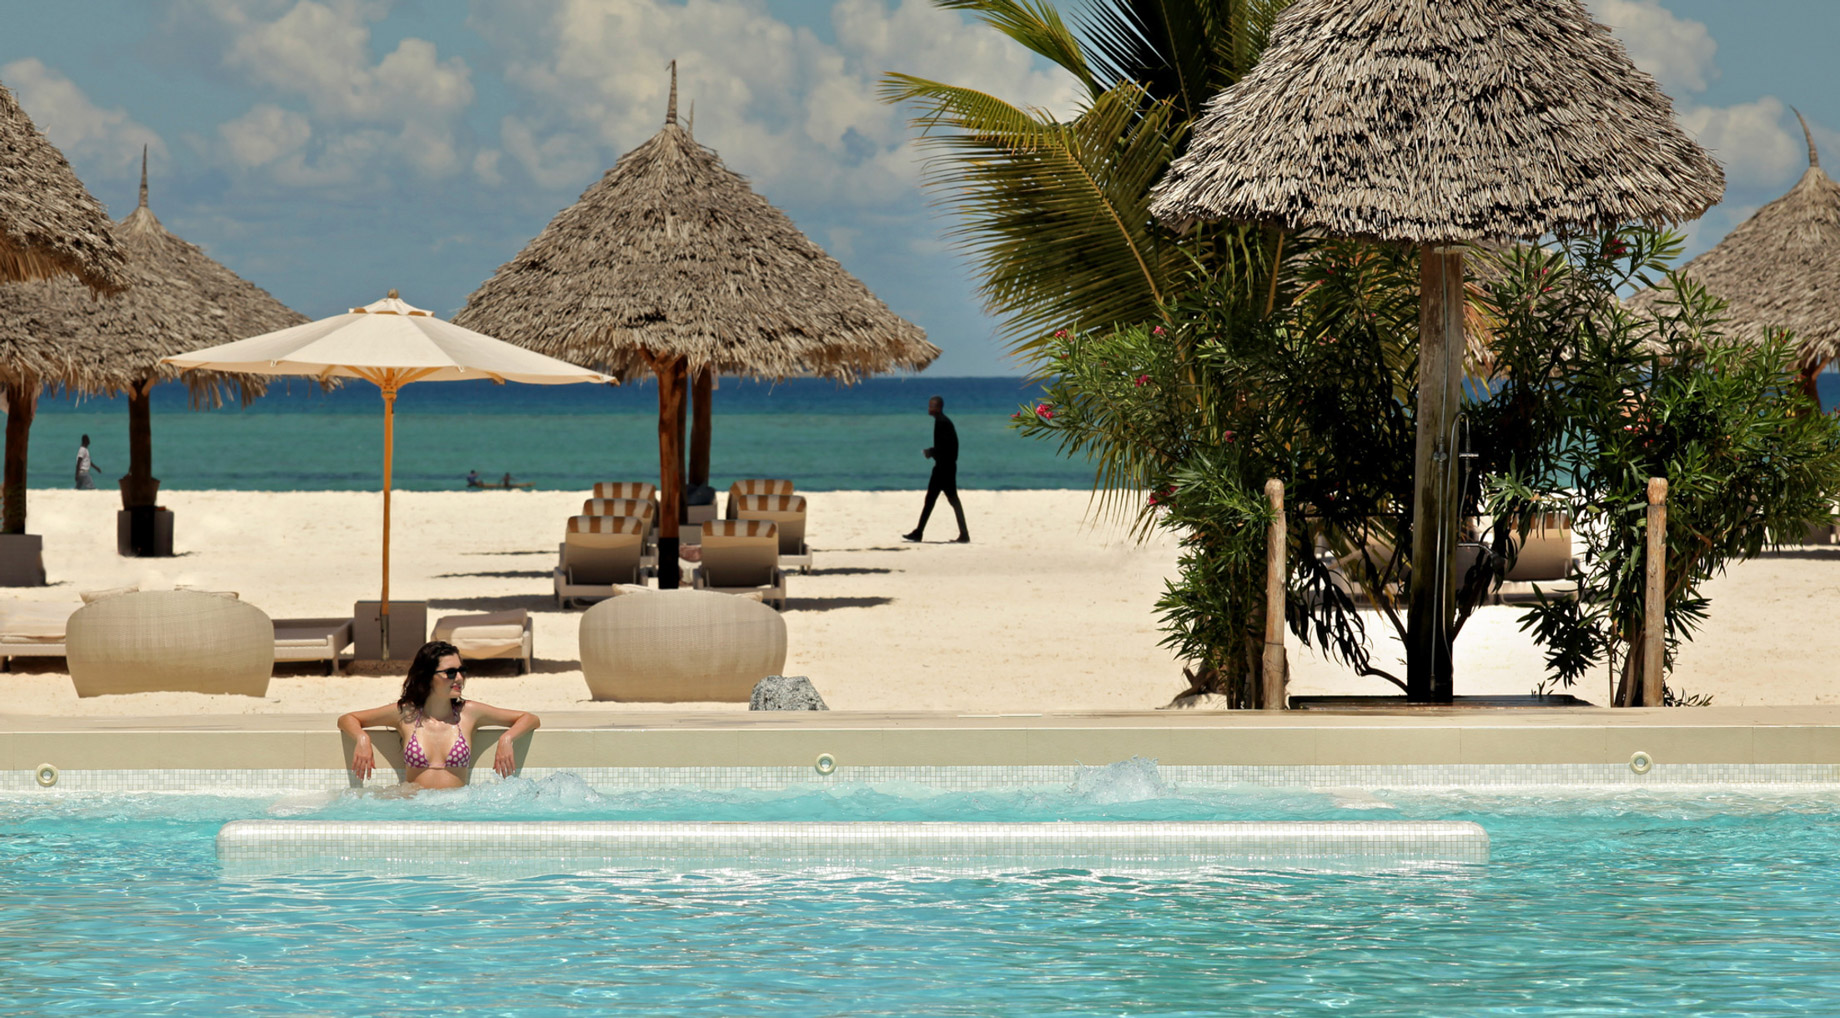 Gold Zanzibar Beach House & Spa Resort – Nungwi, Zanzibar, Tanzania – Pool Beach View